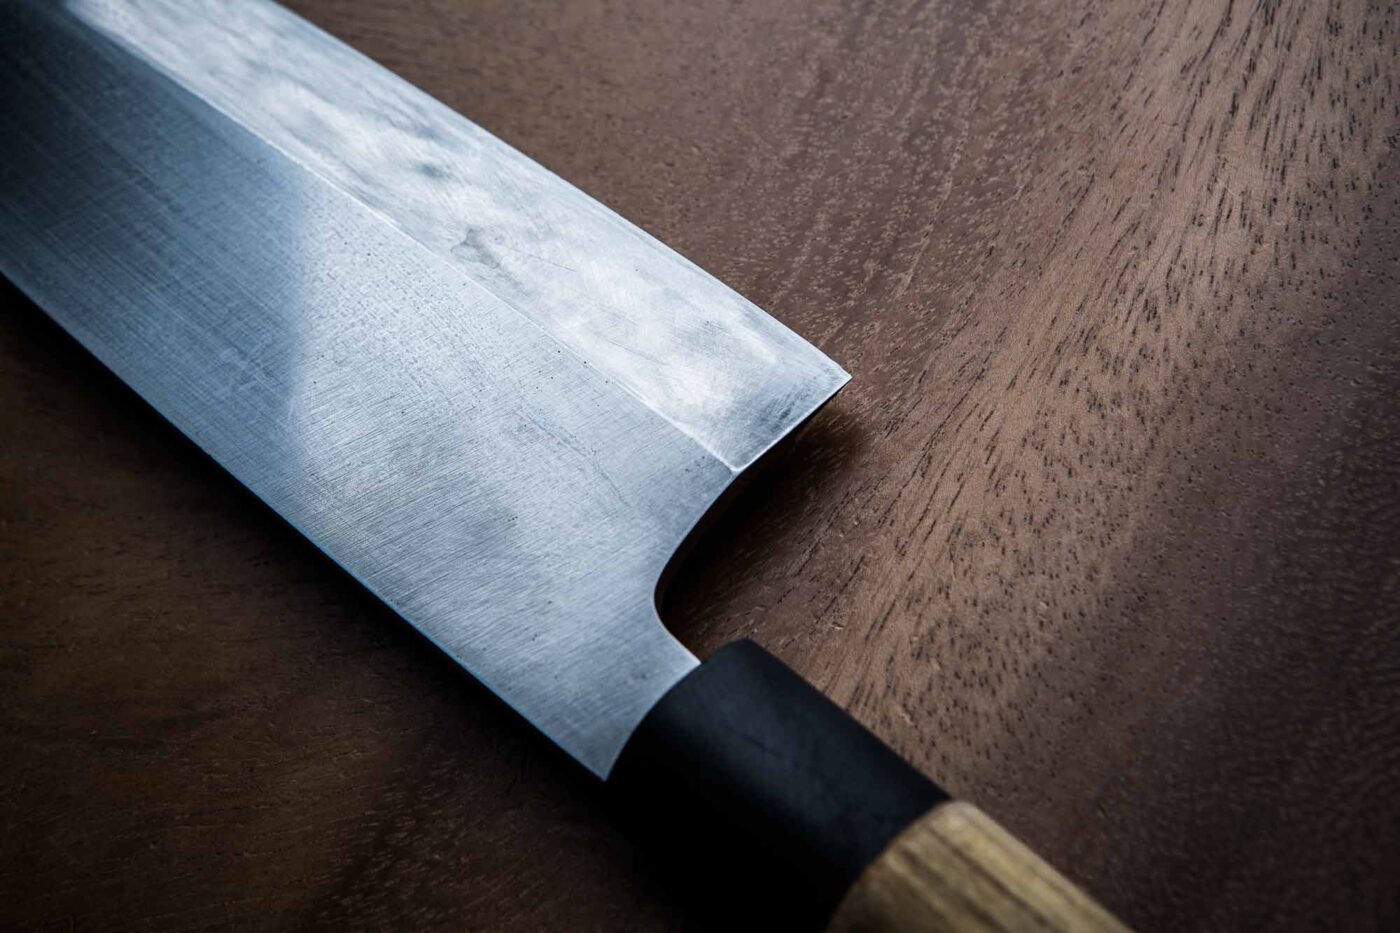 https://www.atunrojofuentes.com/wp-content/uploads/2022/04/cuchillos-japoneses-para-atun-rojo-fuentes-3-1400x933.jpg